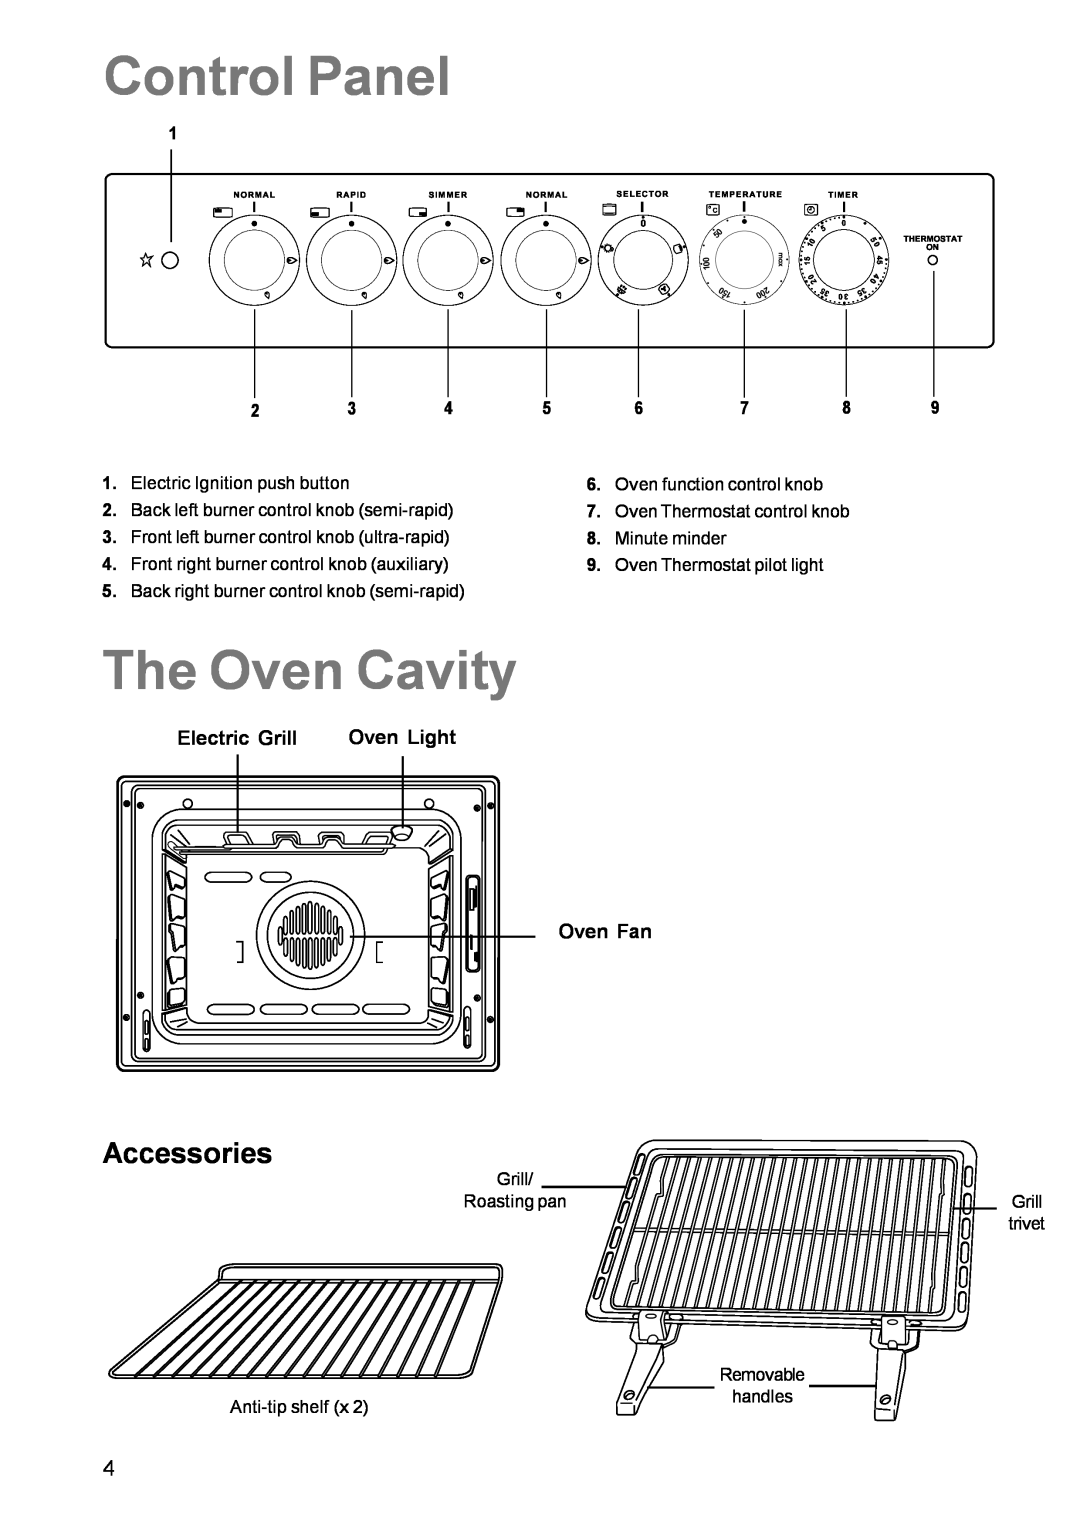 Parkinson Cowan CSIM 509 manual Control Panel, The Oven Cavity, Accessories 